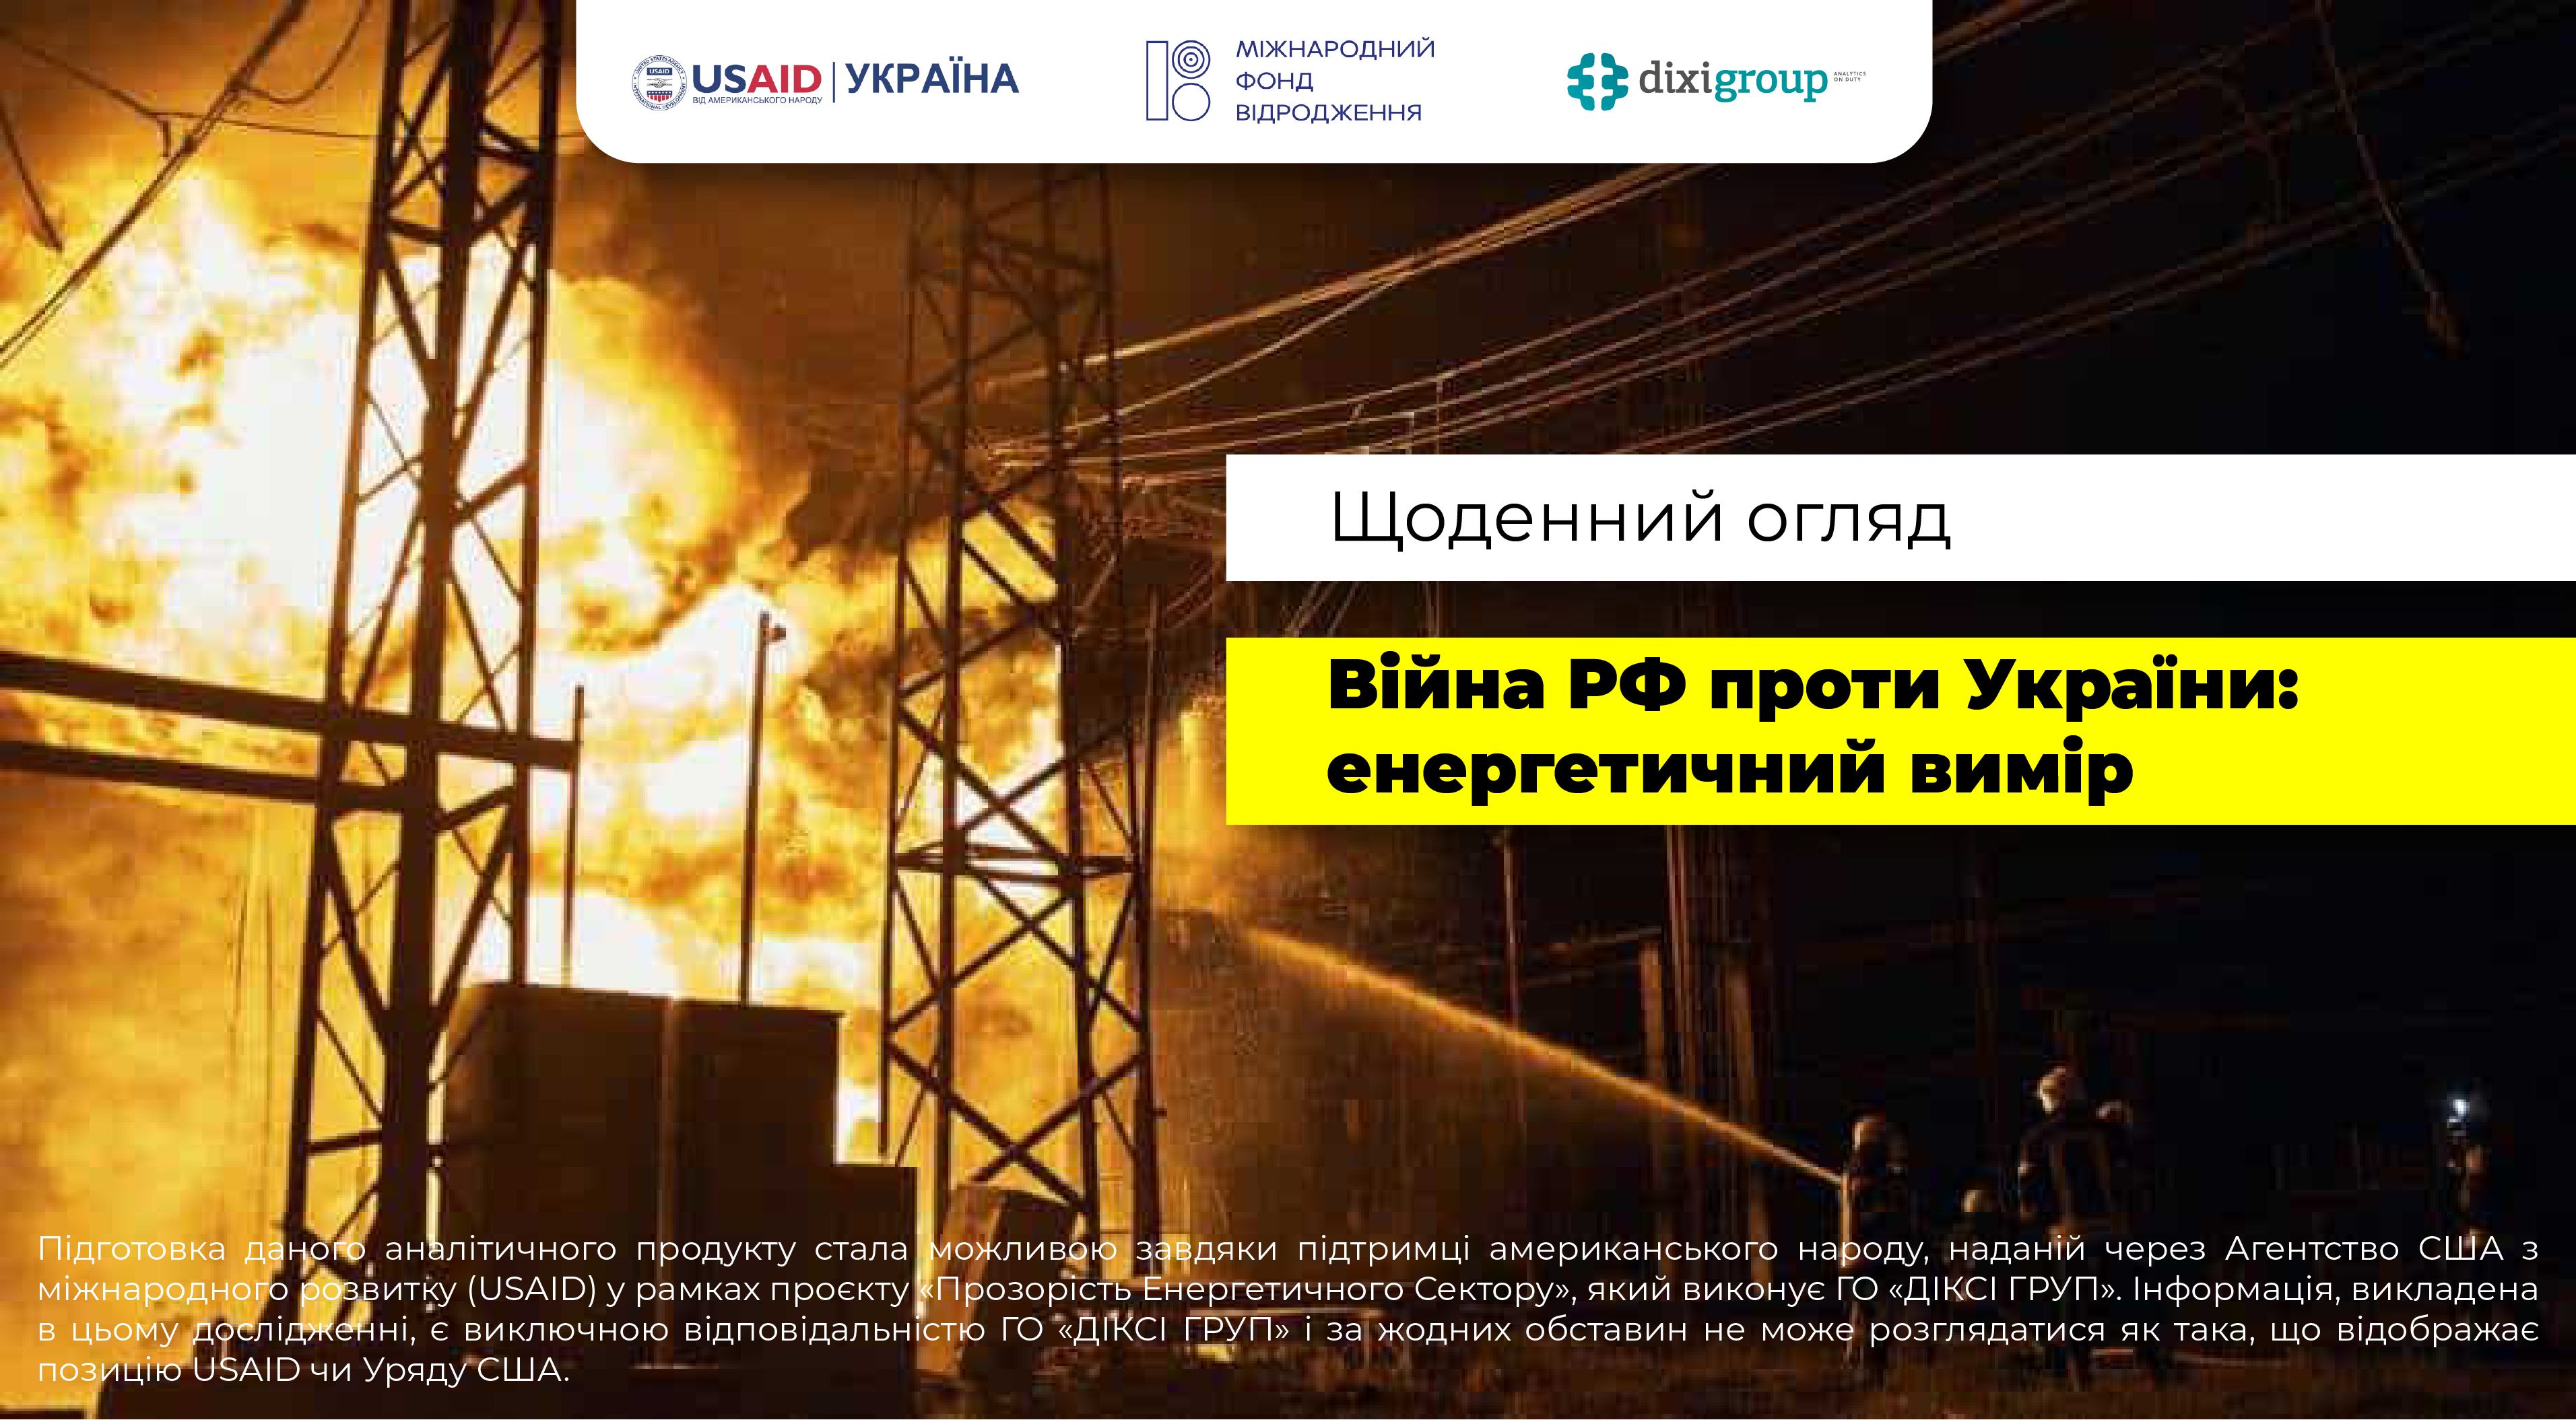 Russian War Against Ukraine: Energy Dimension (DiXi Group alert) – March 22